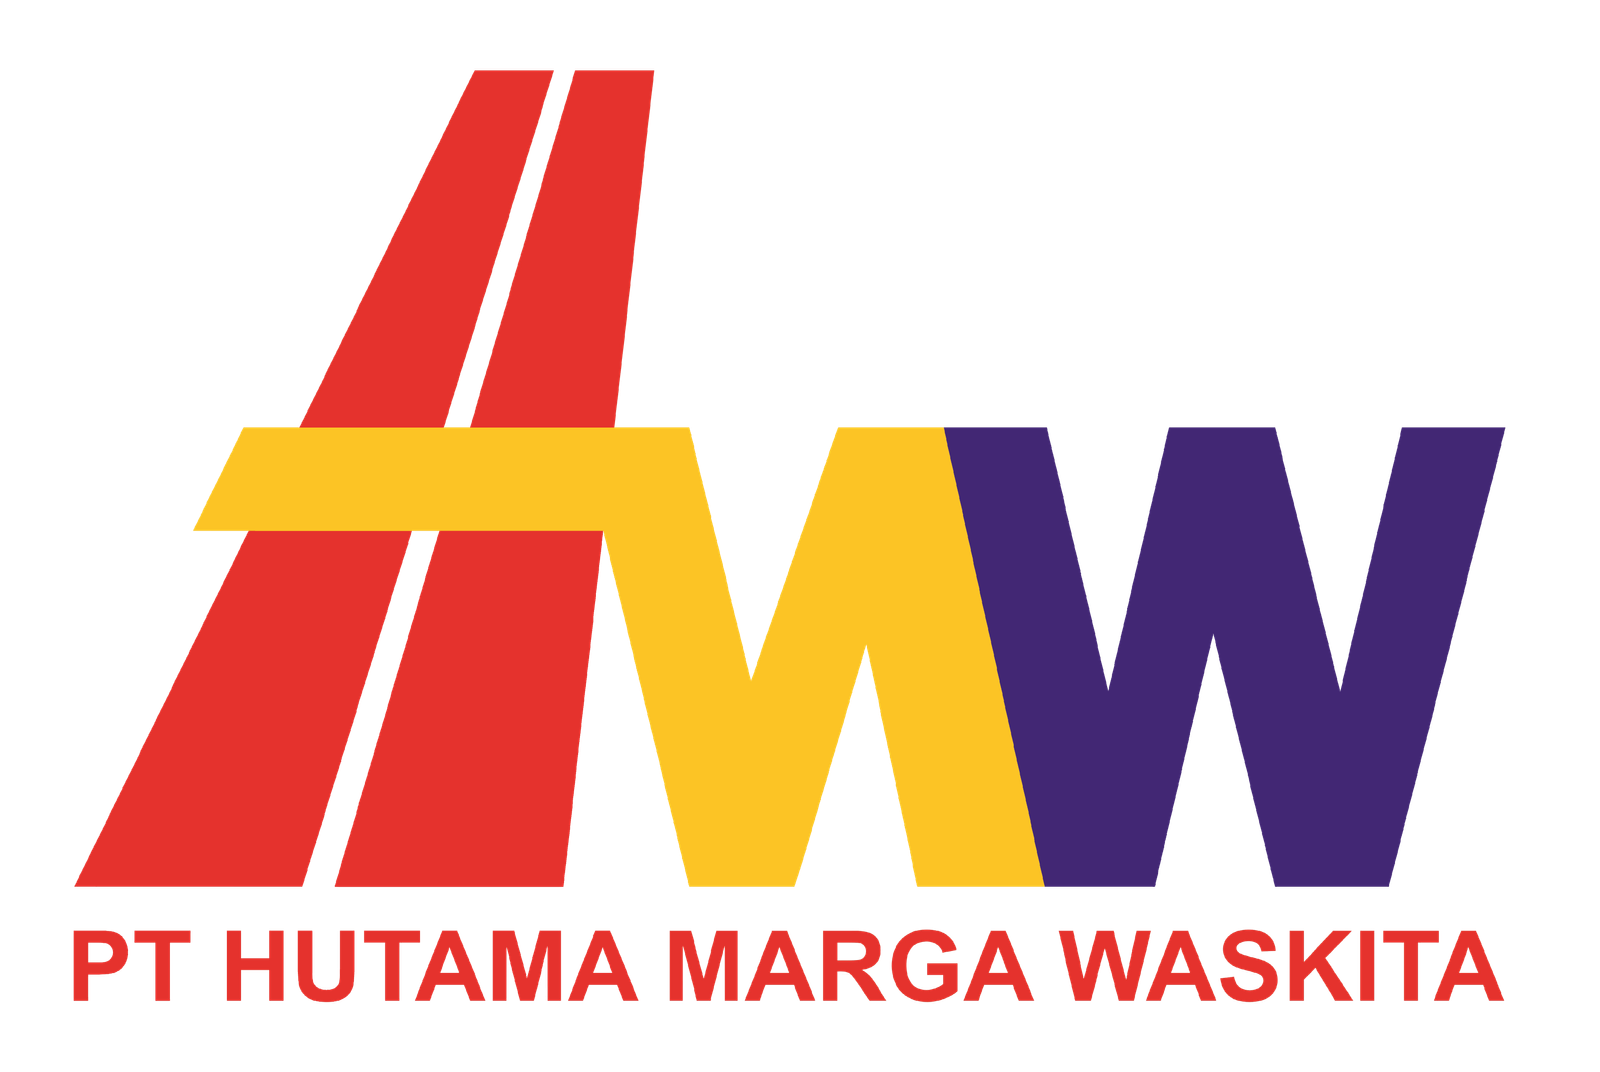 PT. HUTAMA MARGA WASKITA